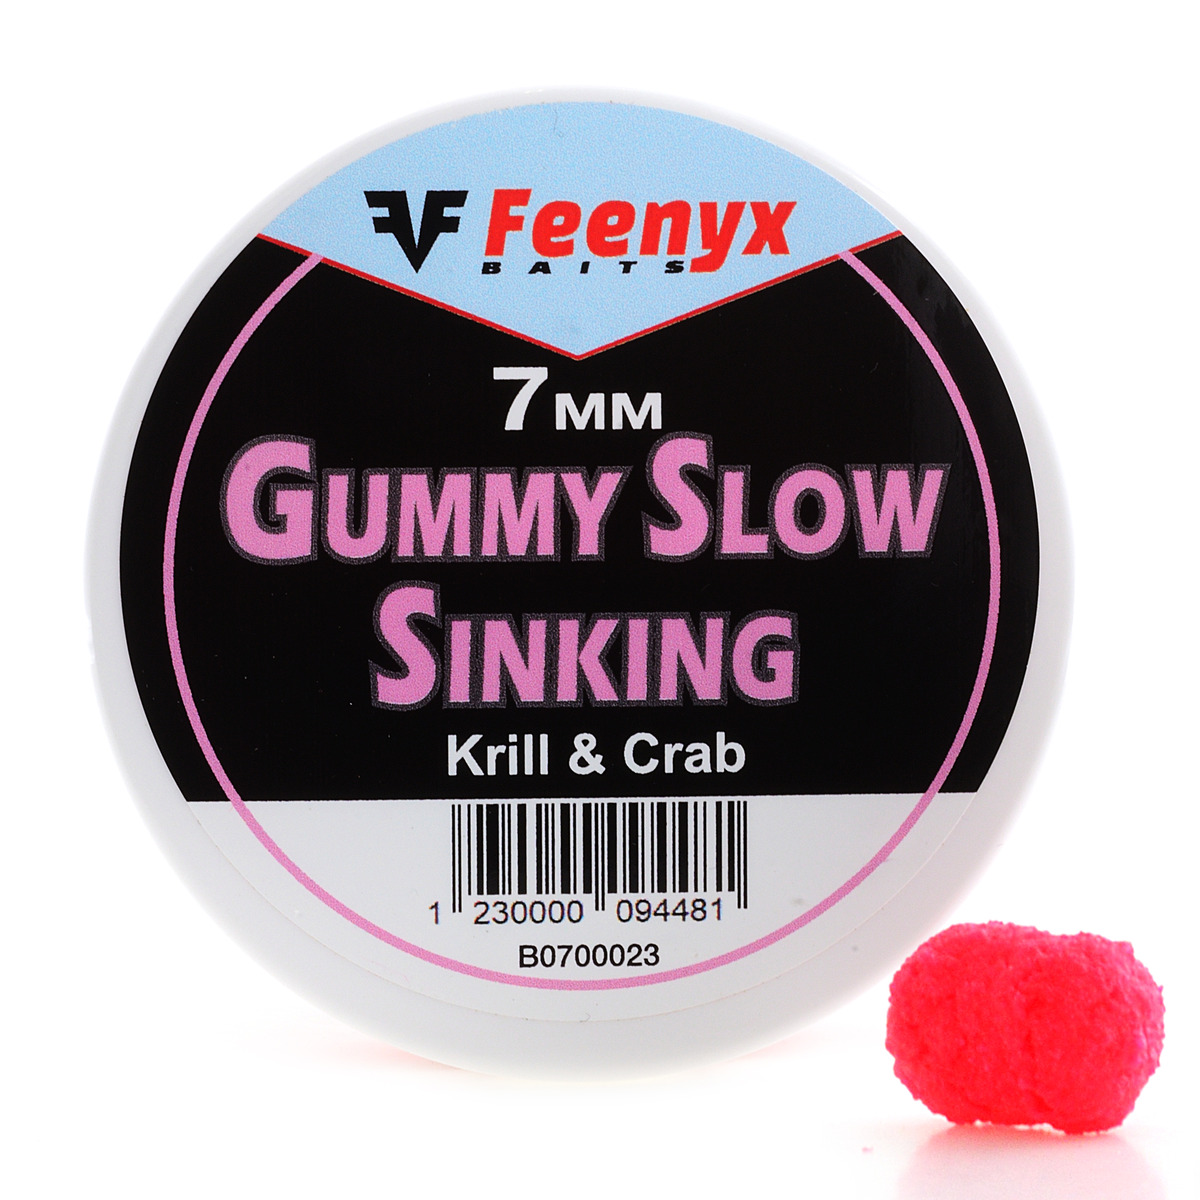 Feenyx Gummy Slow Sinking Krill & Crab - 7 mm